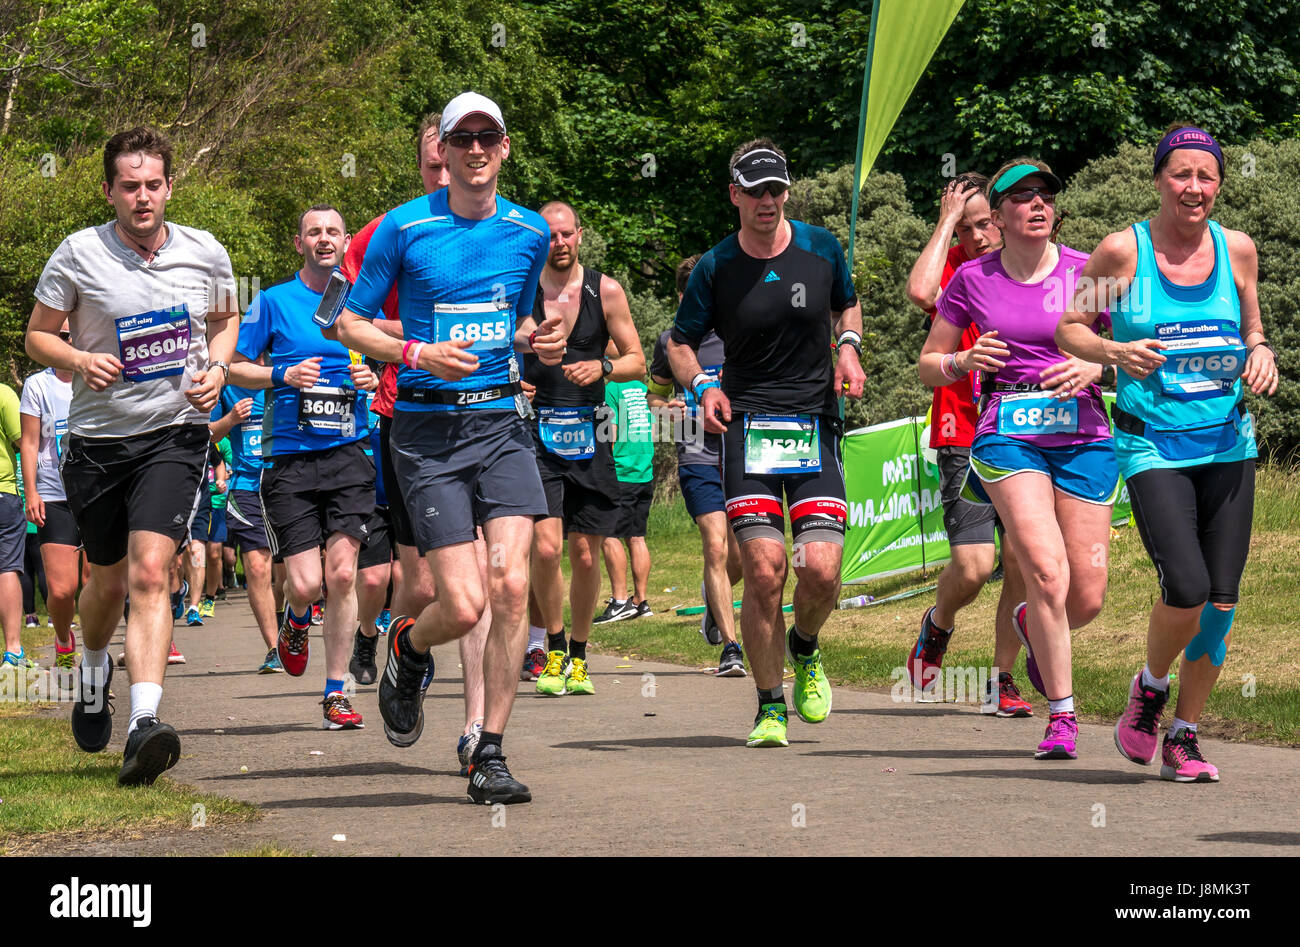 Athletics edinburgh marathon hi-res stock photography and images - Alamy